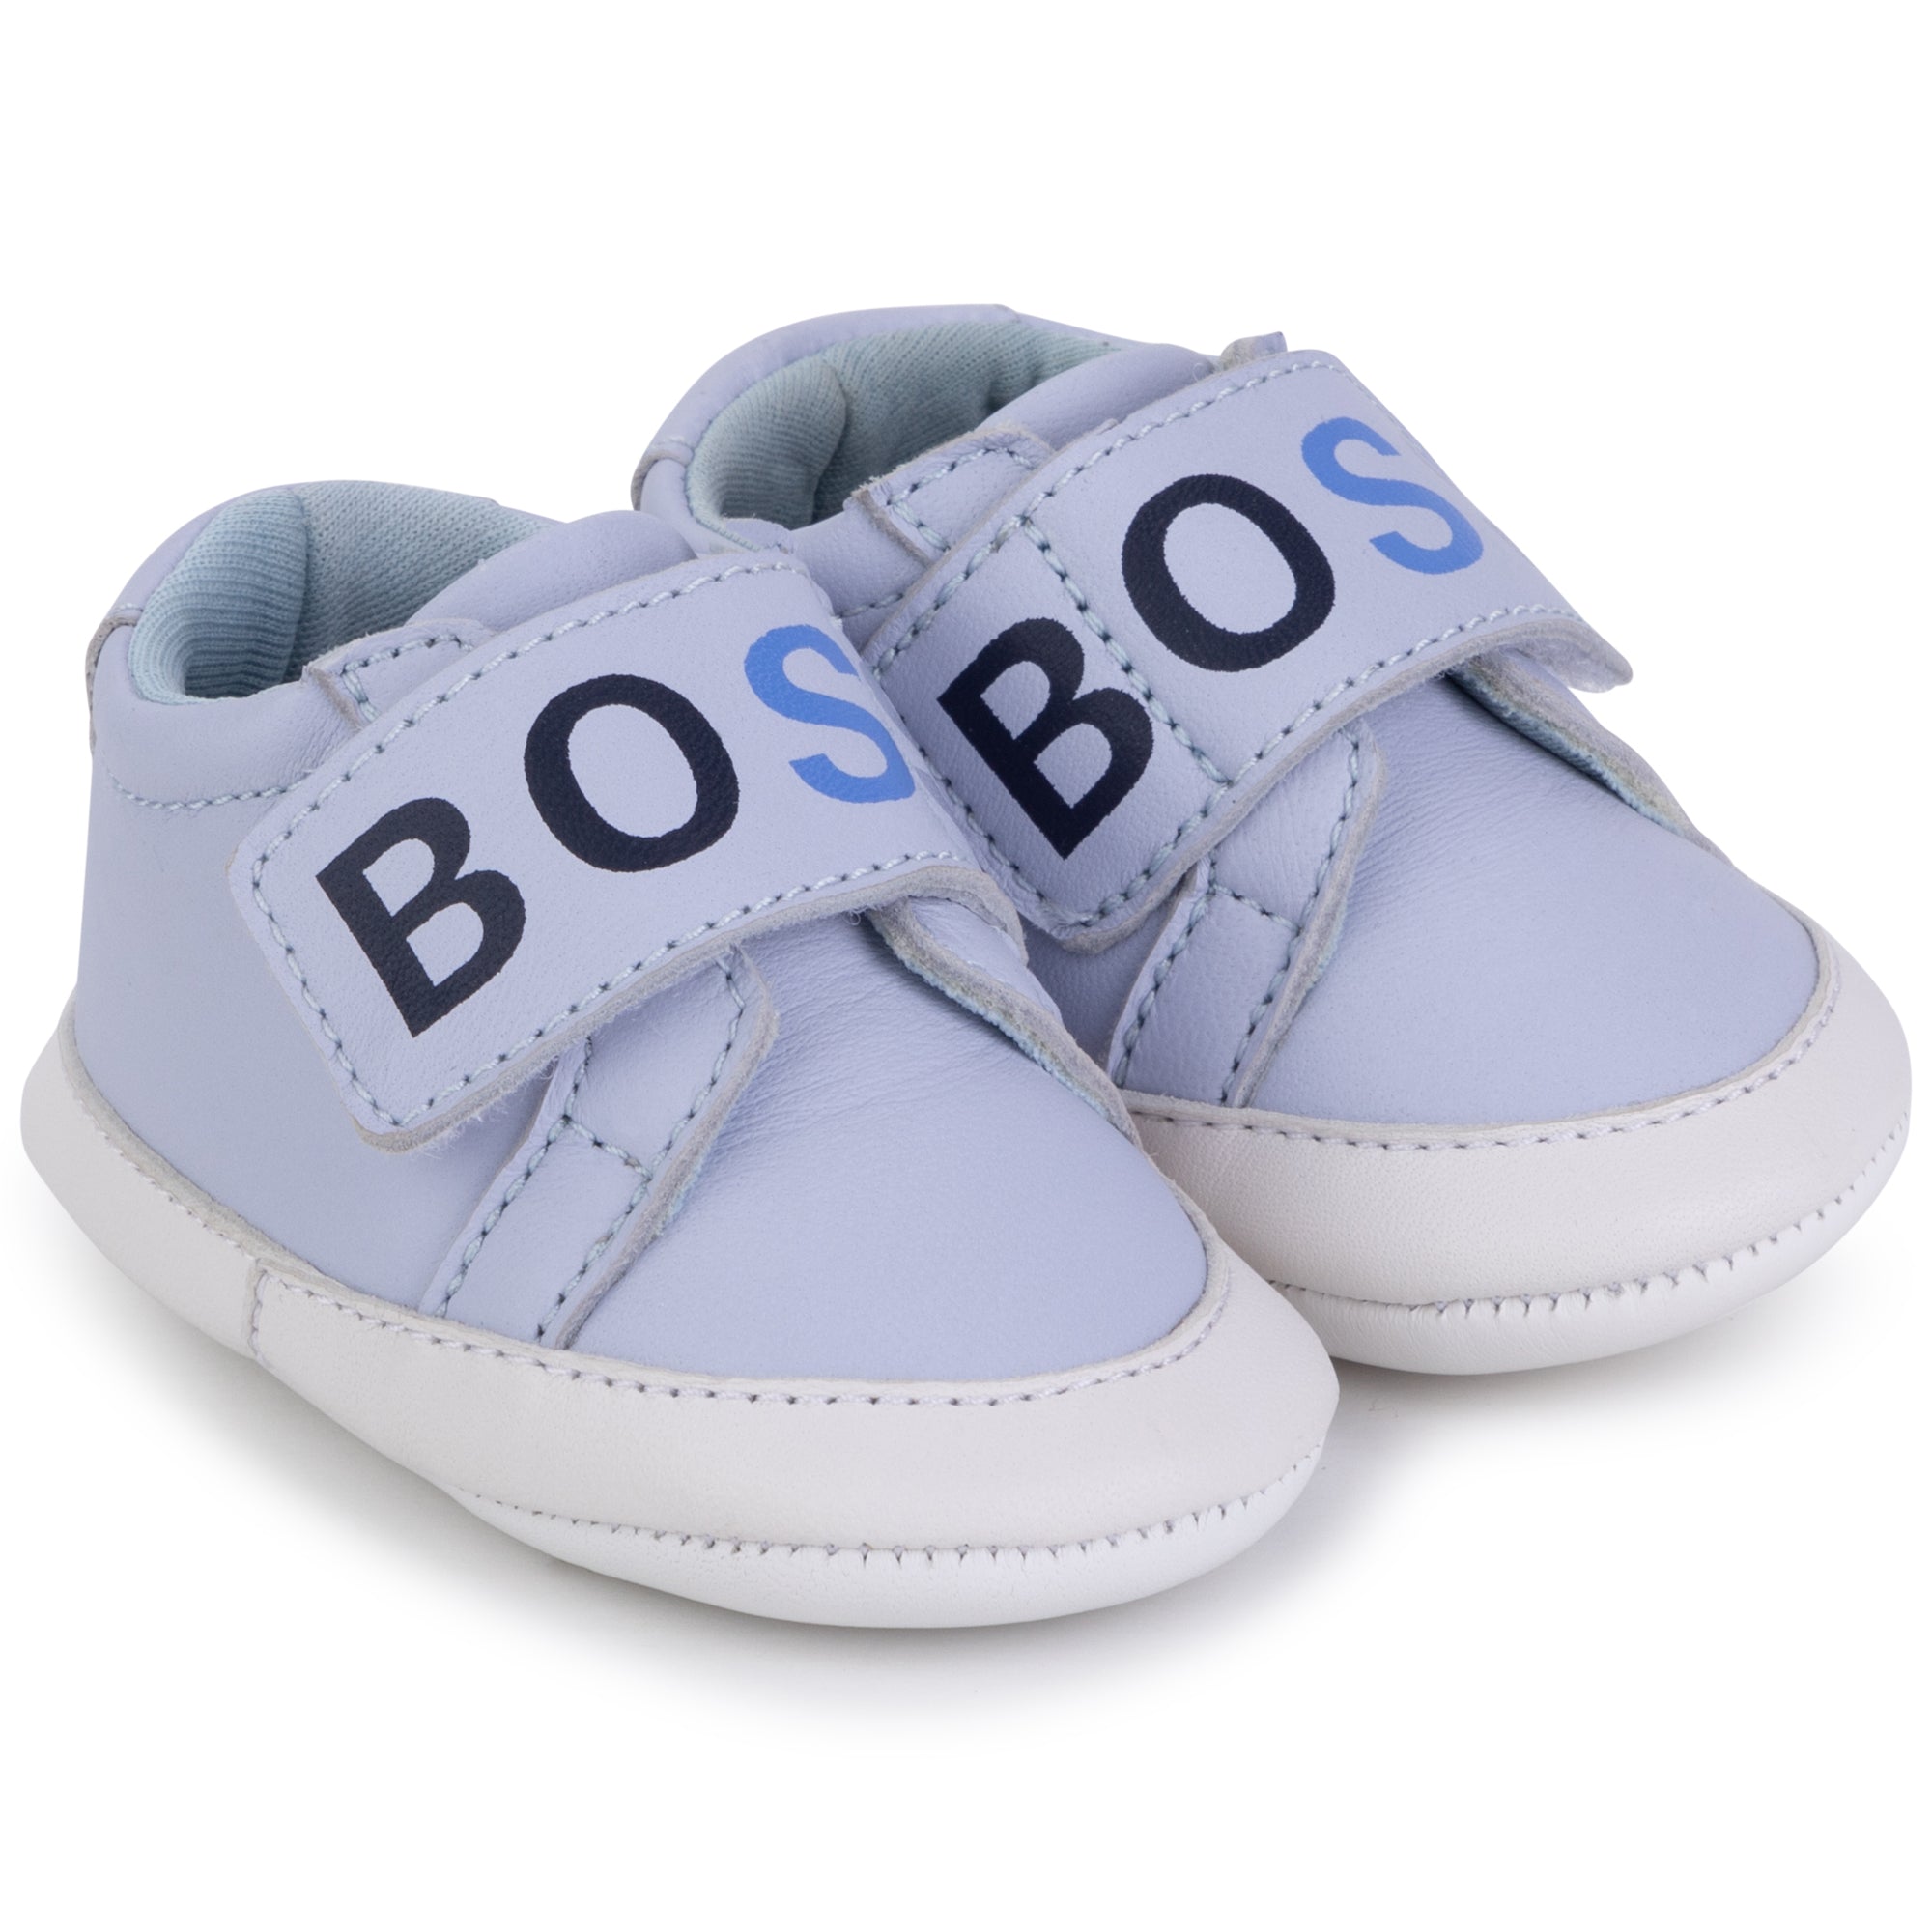 Hugo Boss Baby Boys Soft Shoes